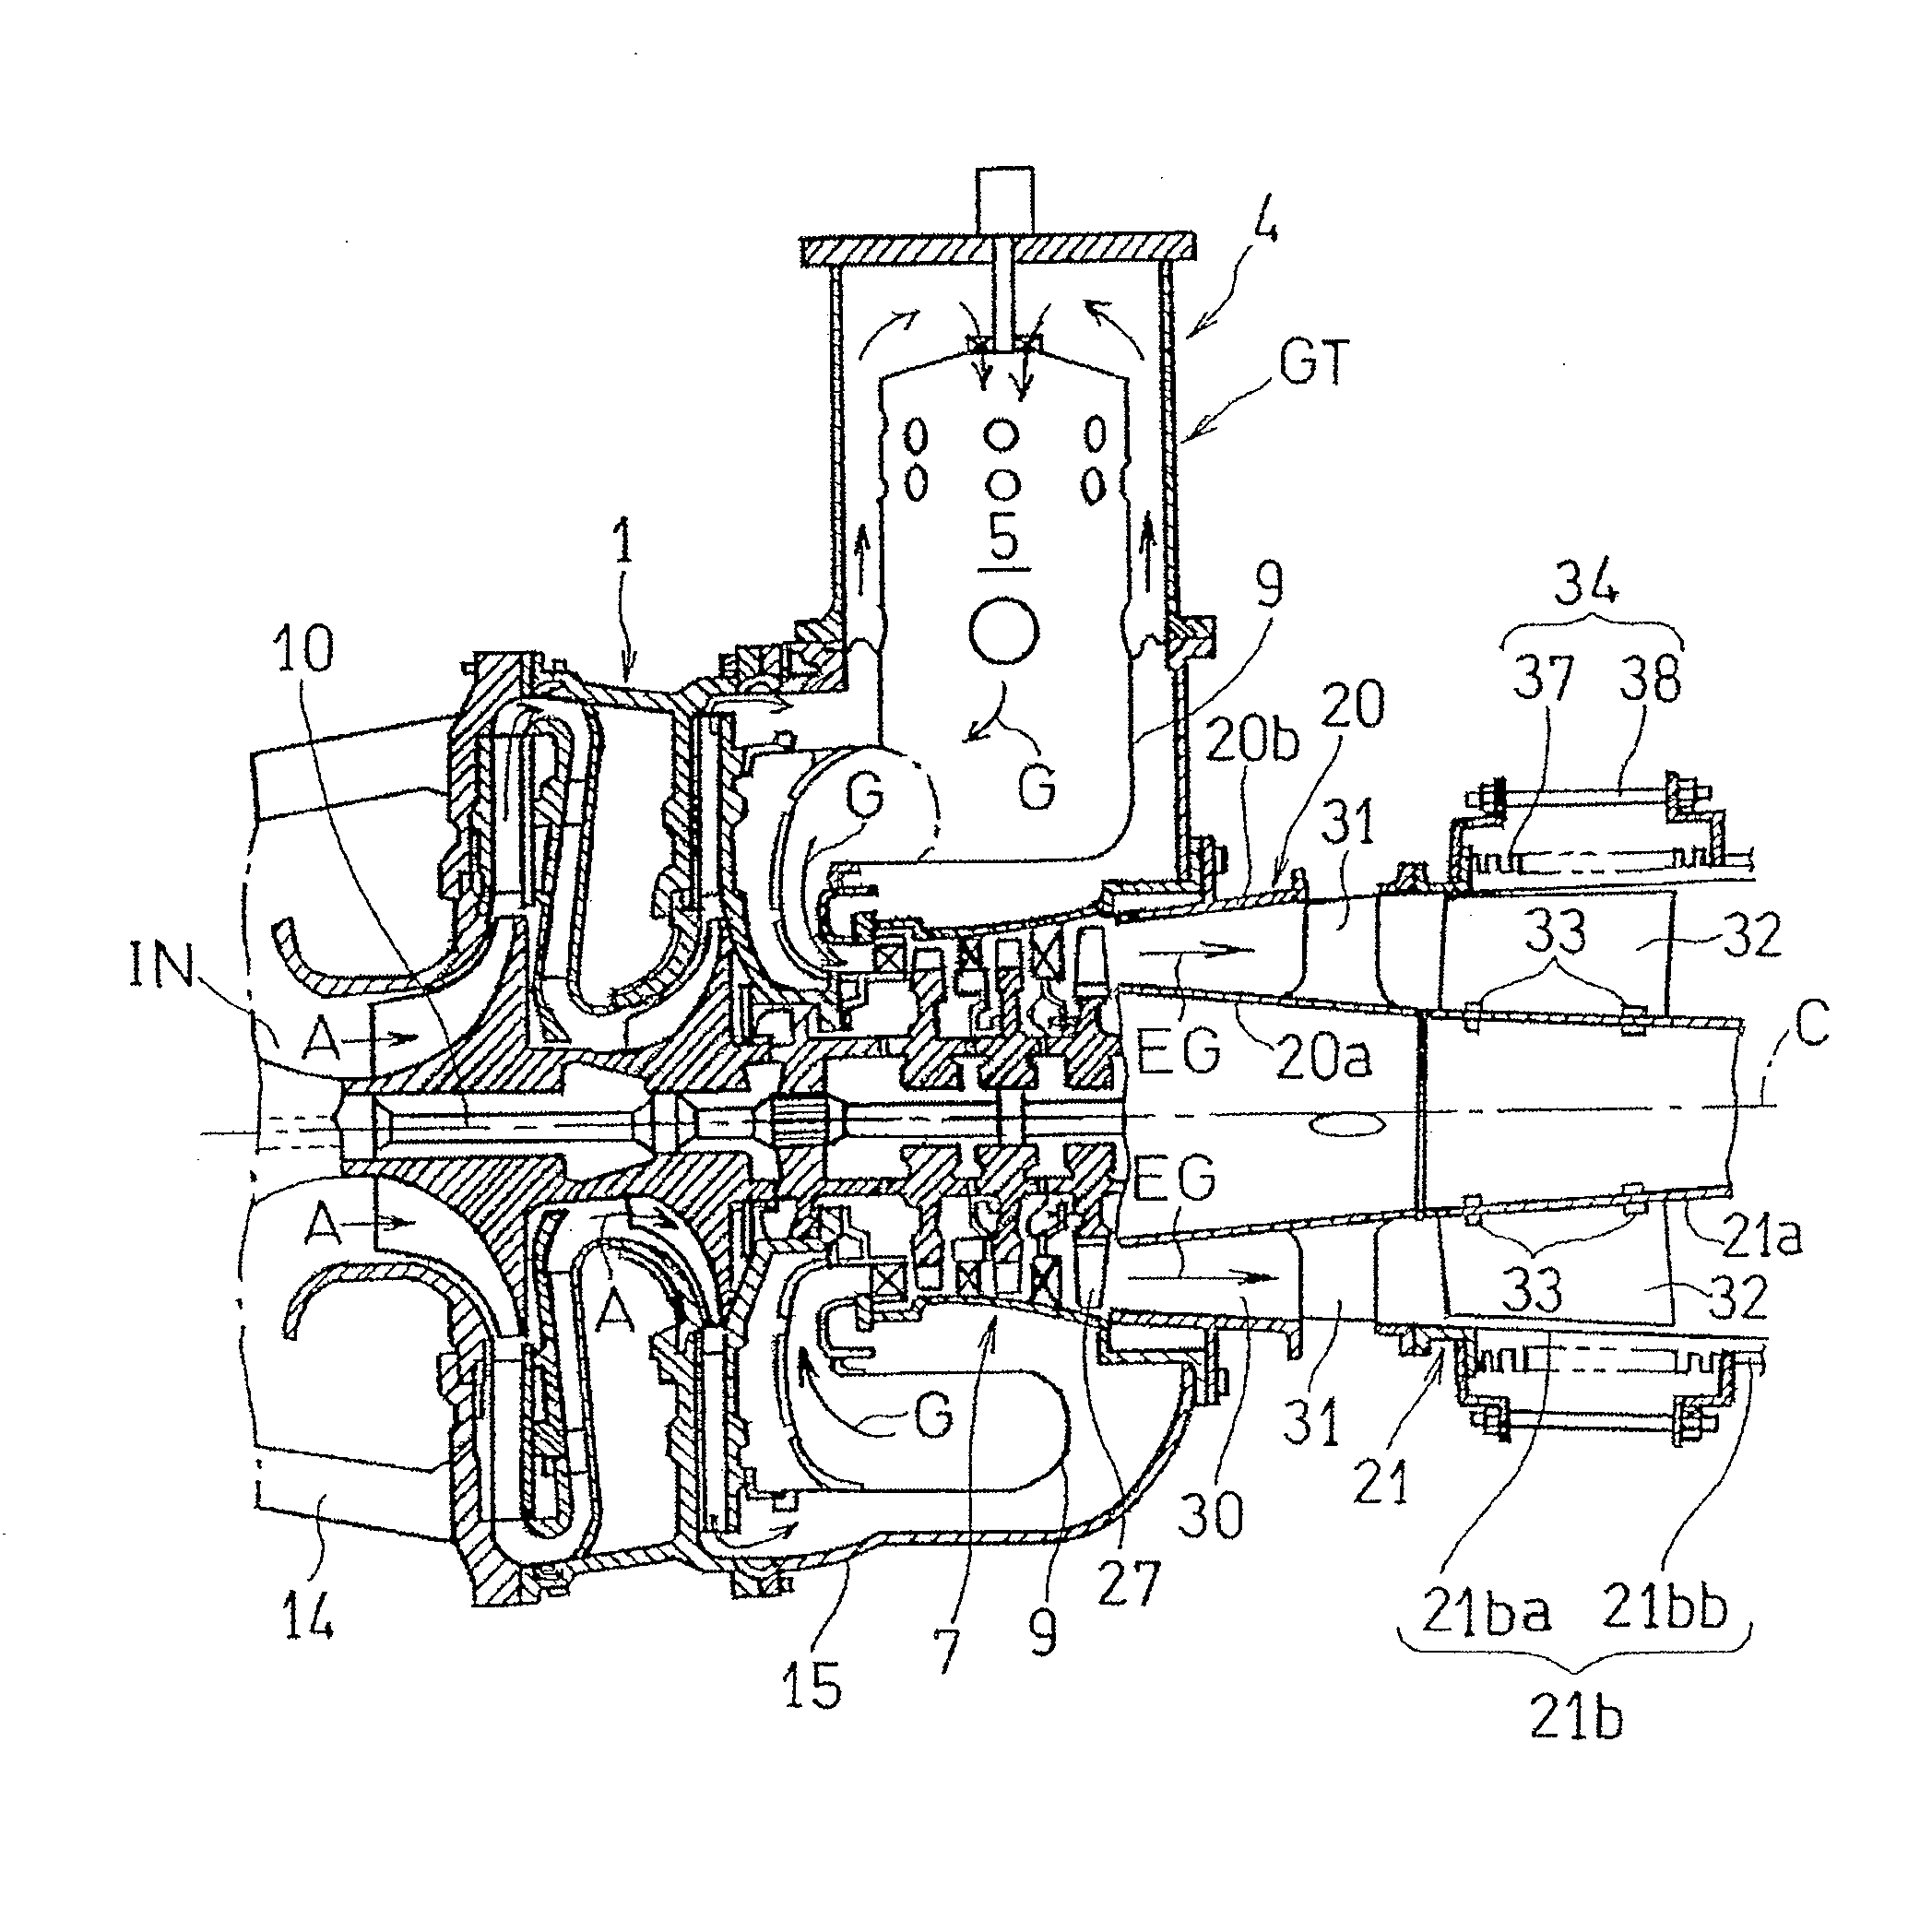 Gas turbine device